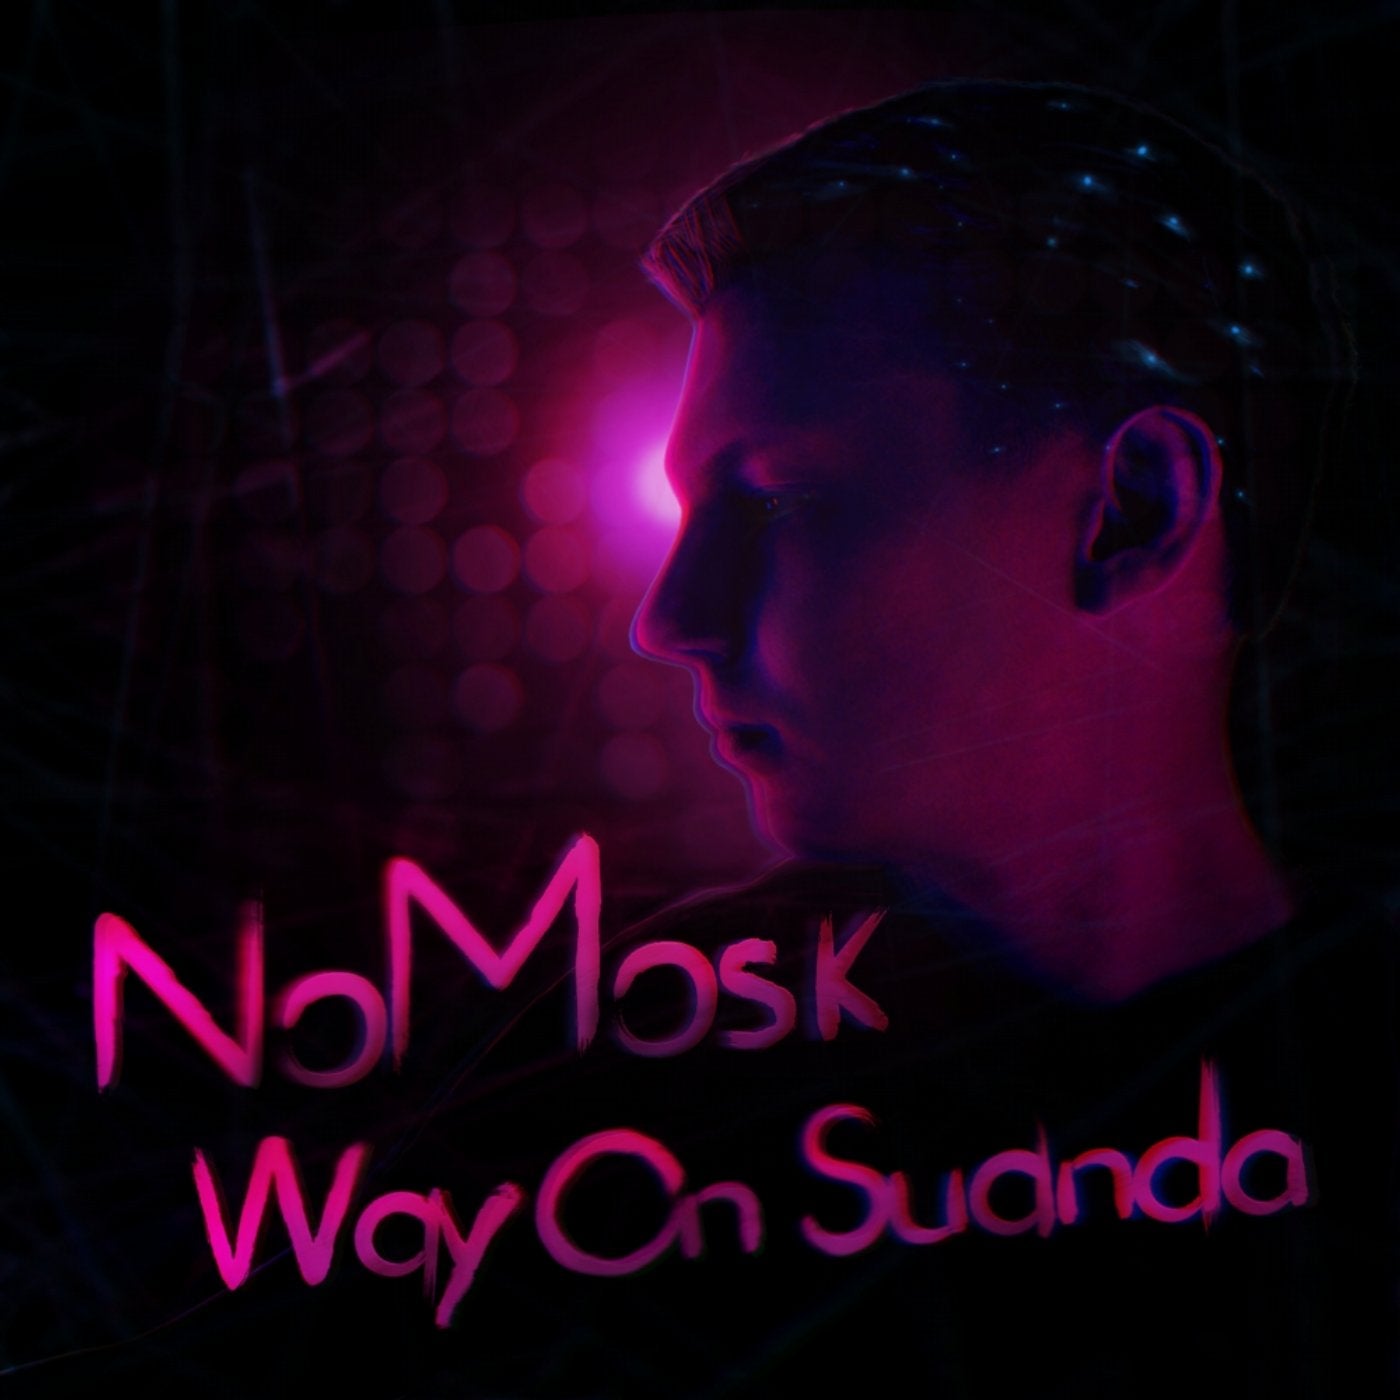 Way On Suanda: Mixed By NoMosk